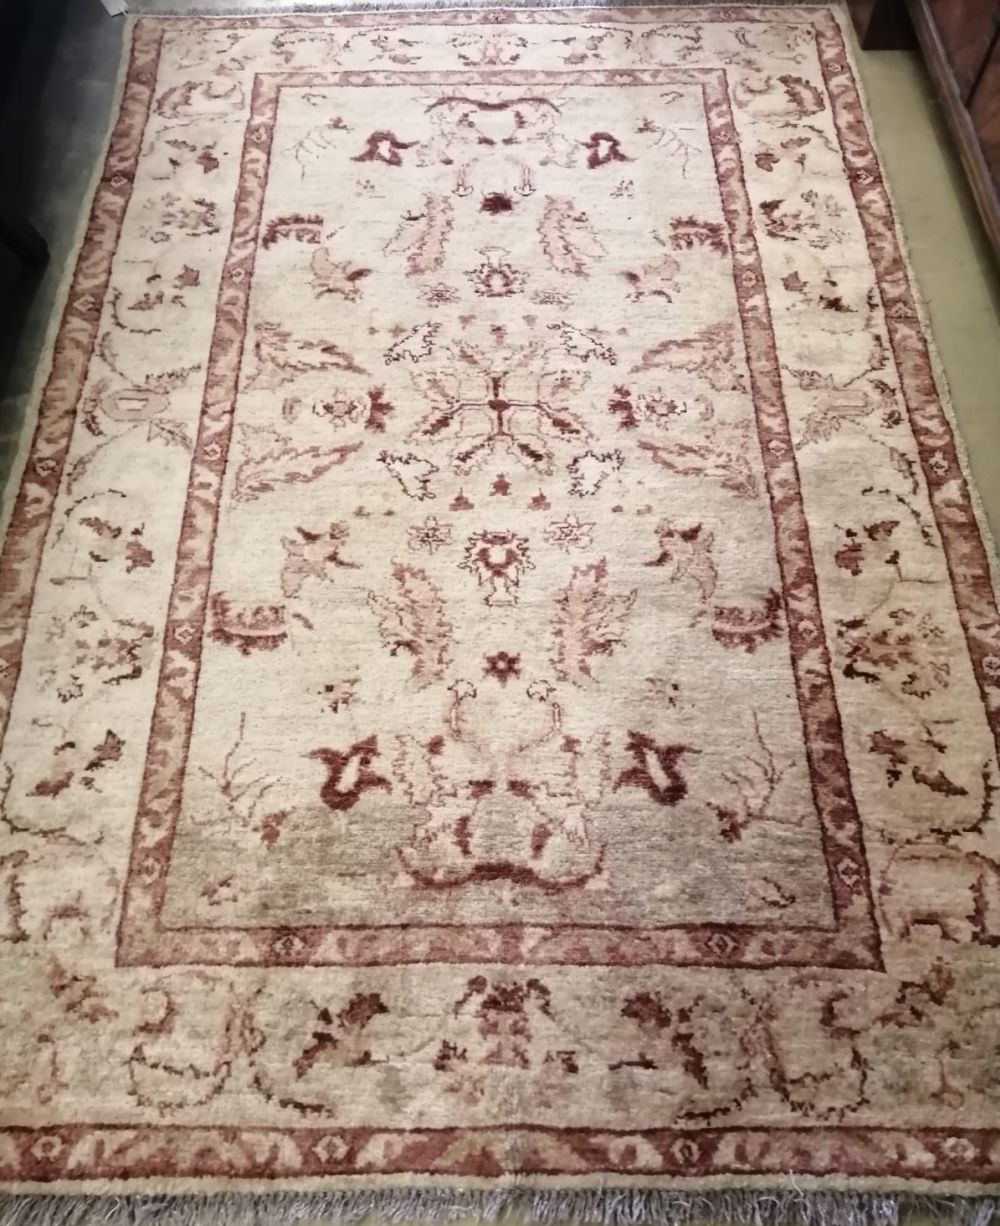 A Ziegler style rug, 180 x 120cm